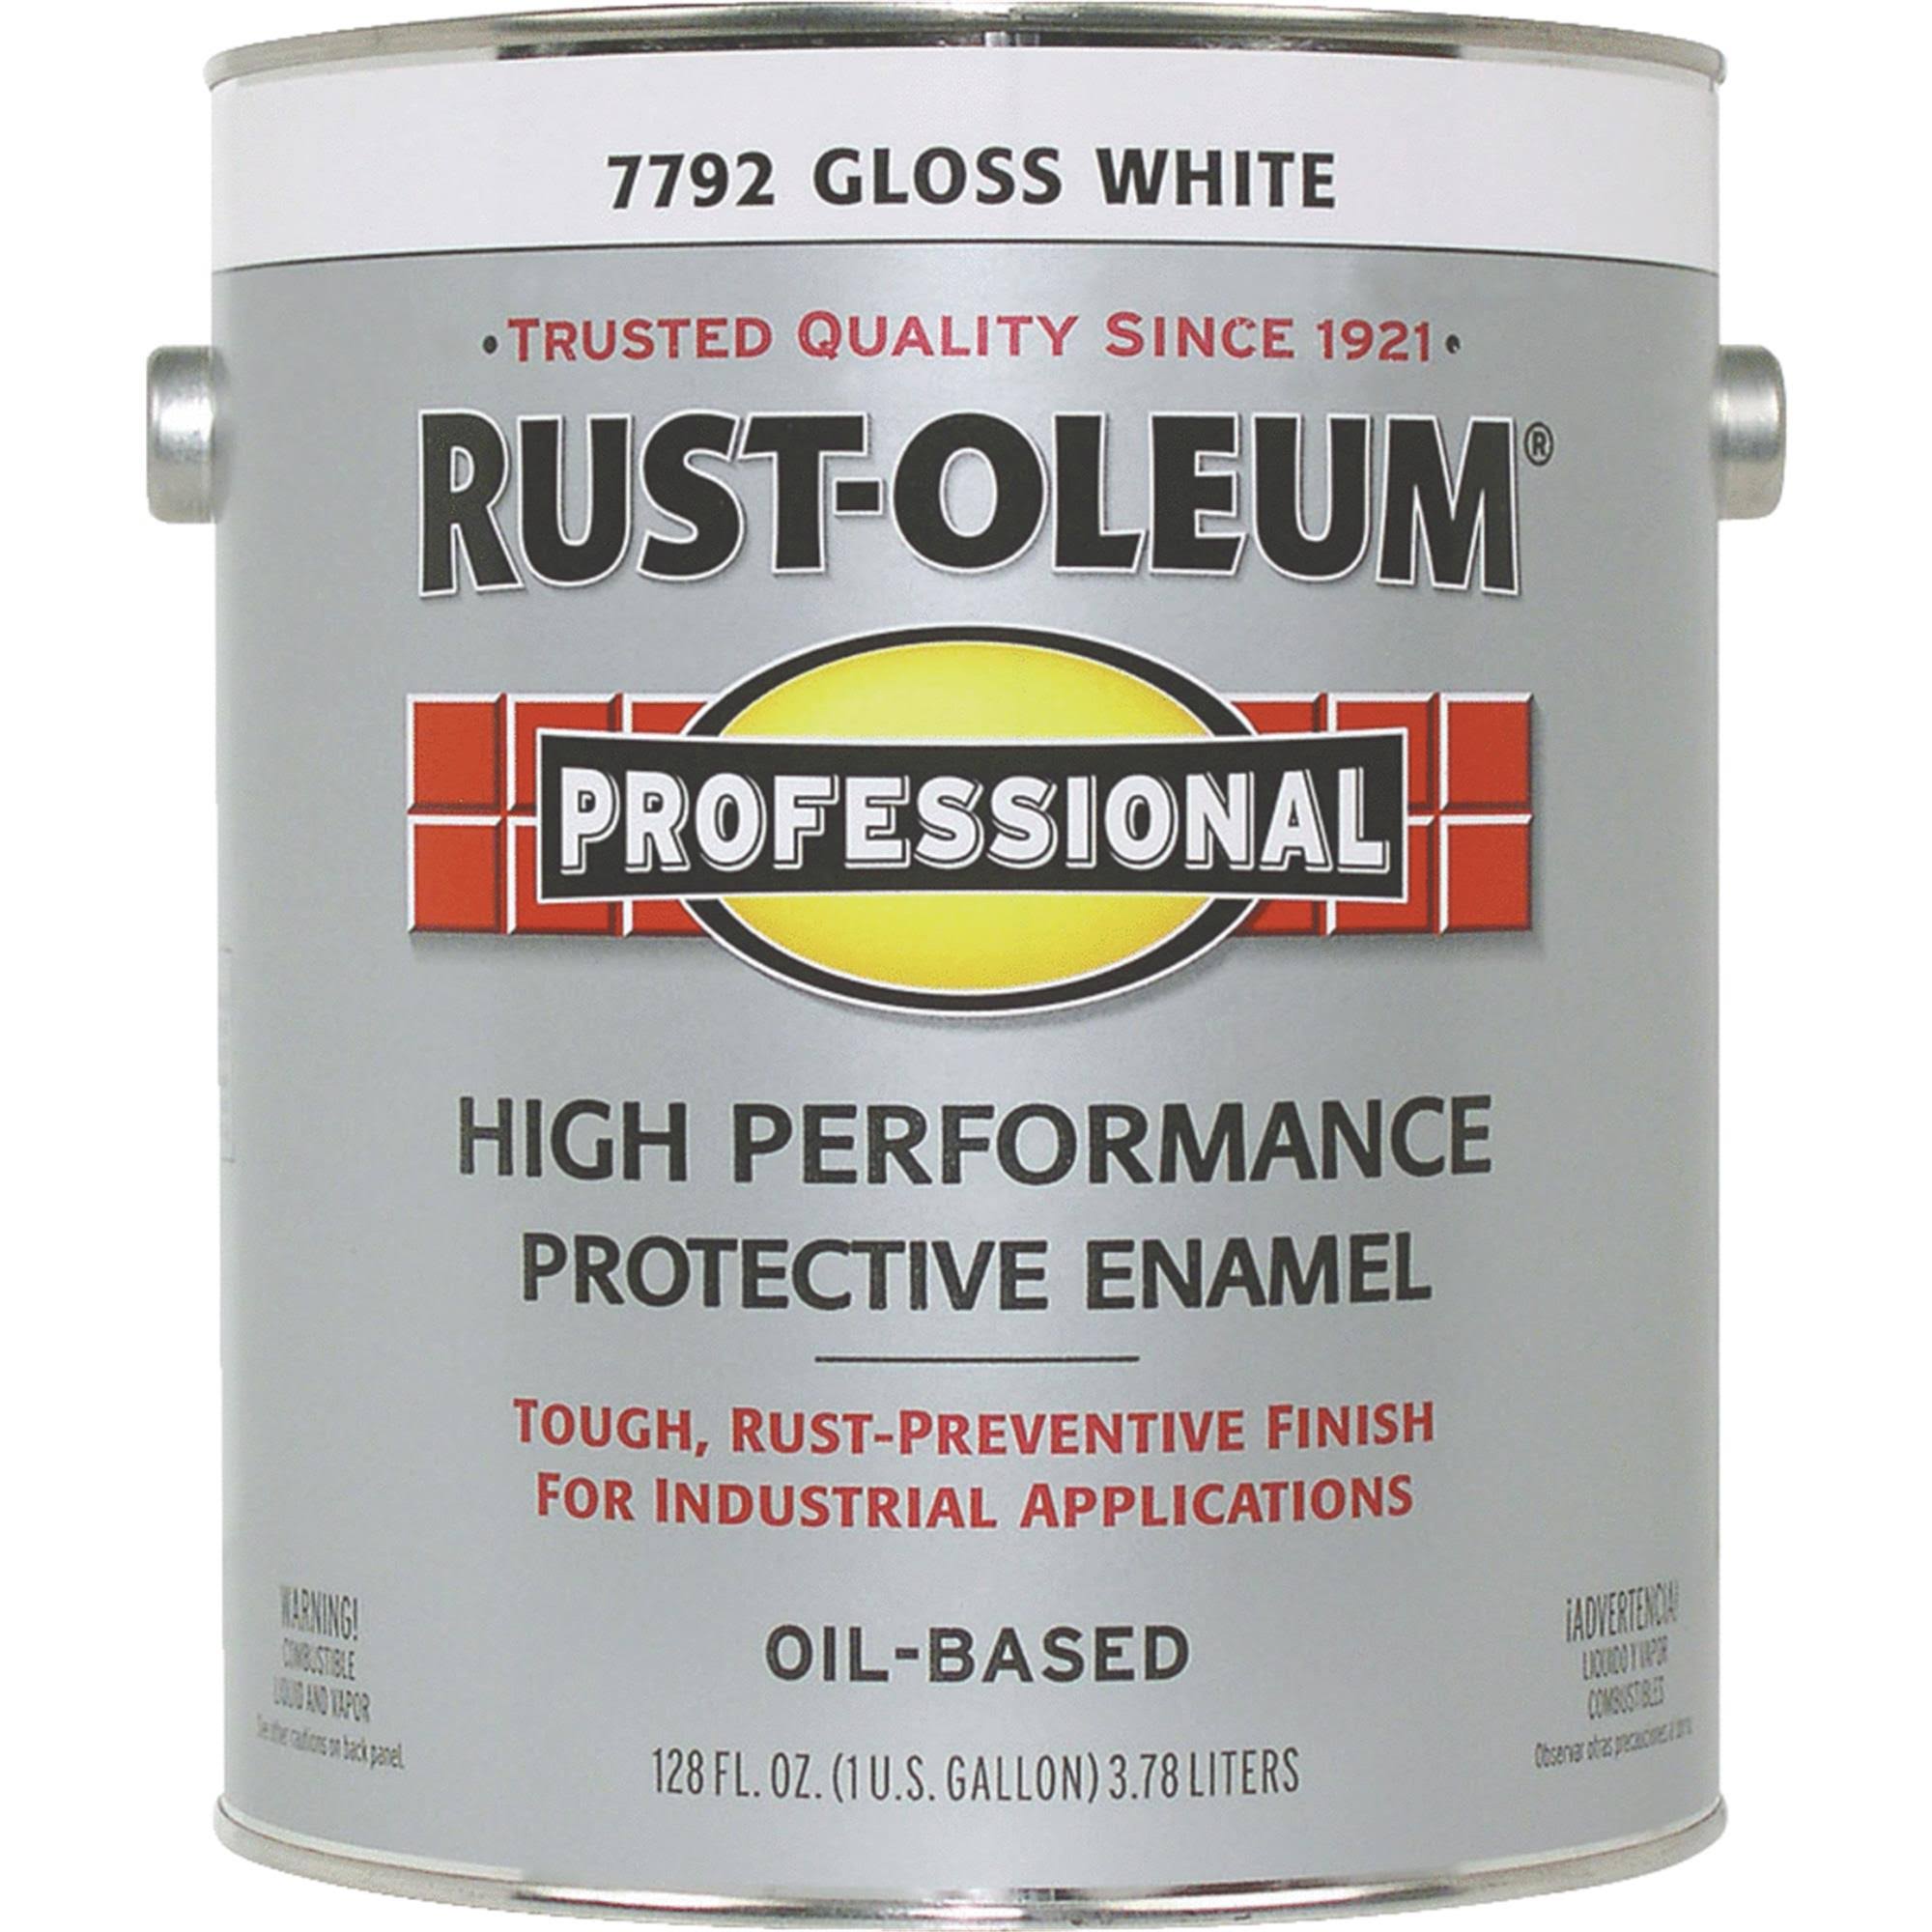 Rust-Oleum Professional High Performance Protective Enamel - Gloss White, 1 Gallon